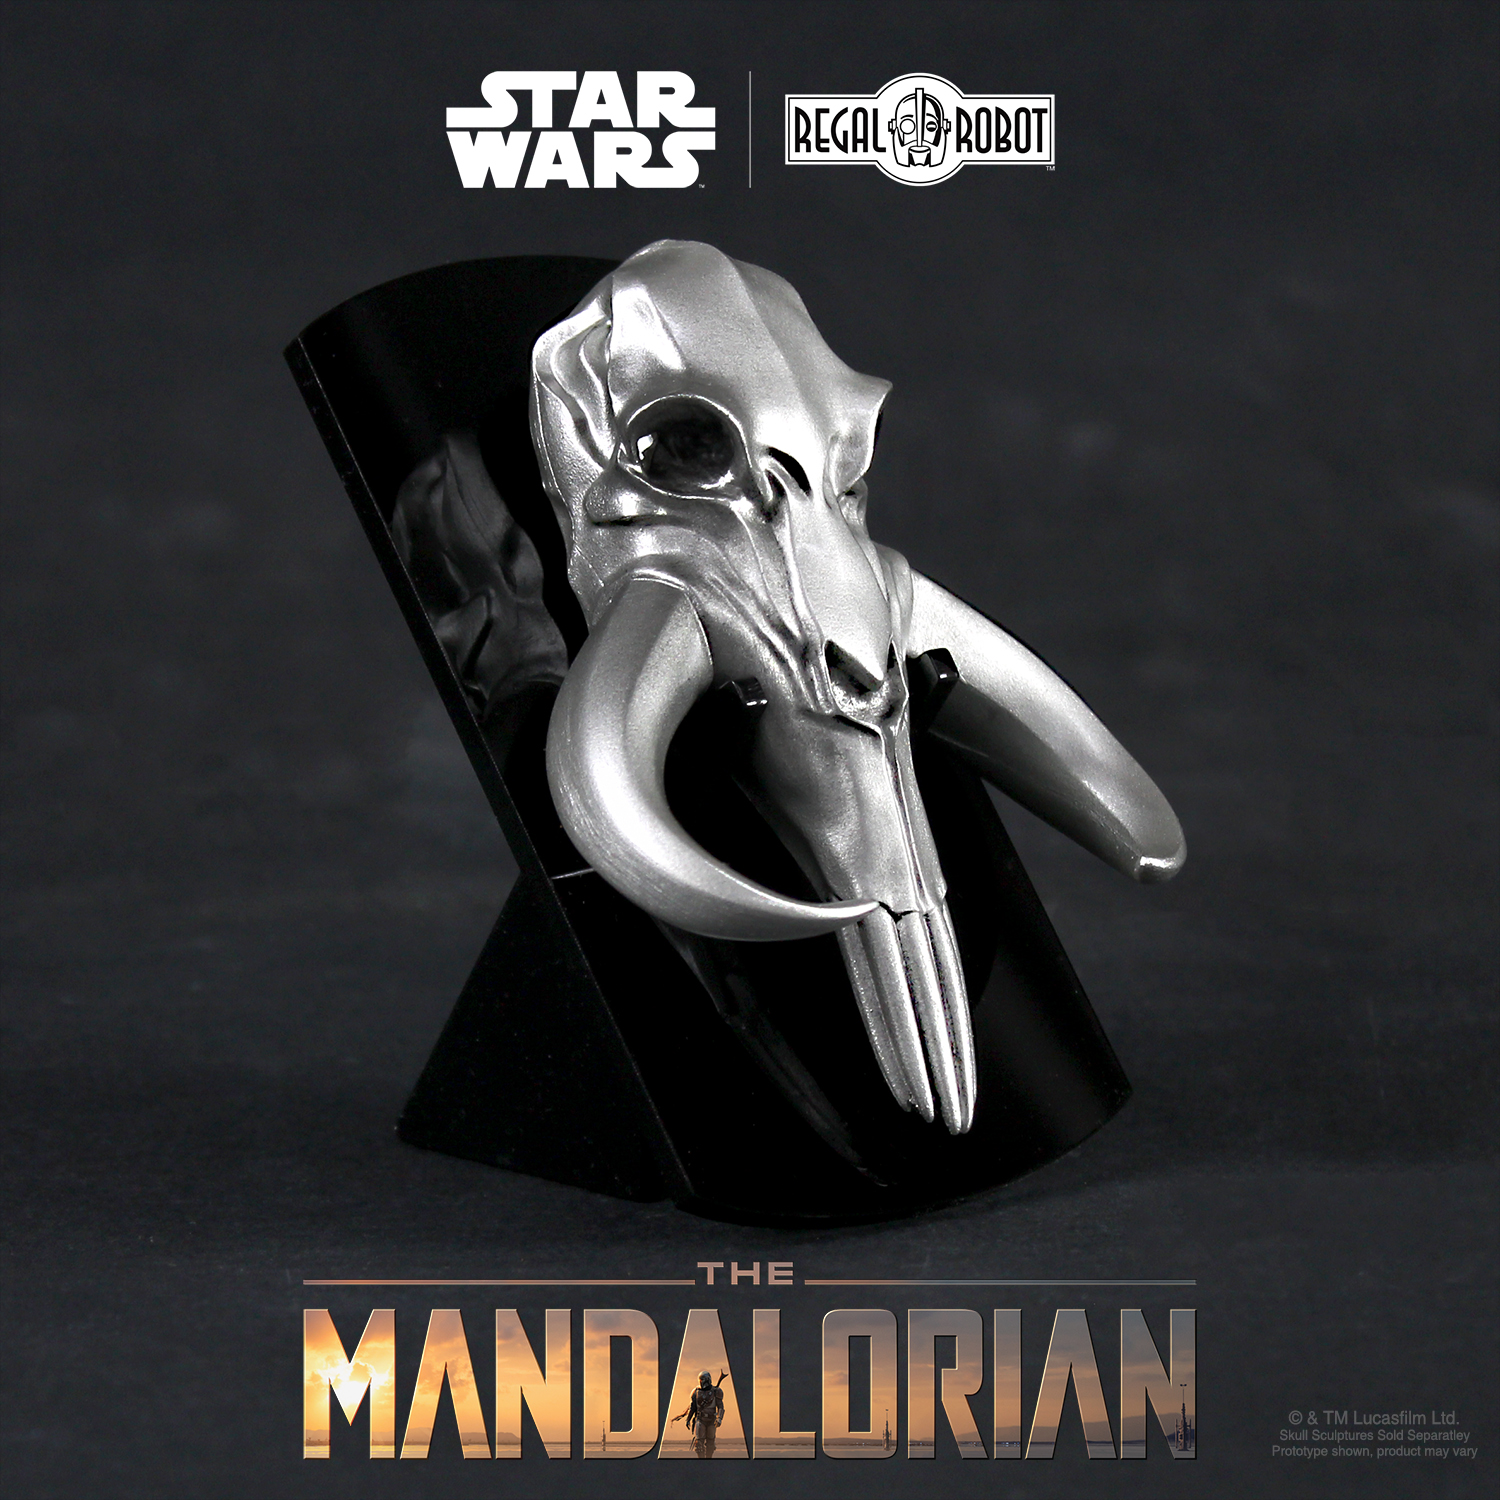 This is the way, Mandalorian mythosaur symbol prop